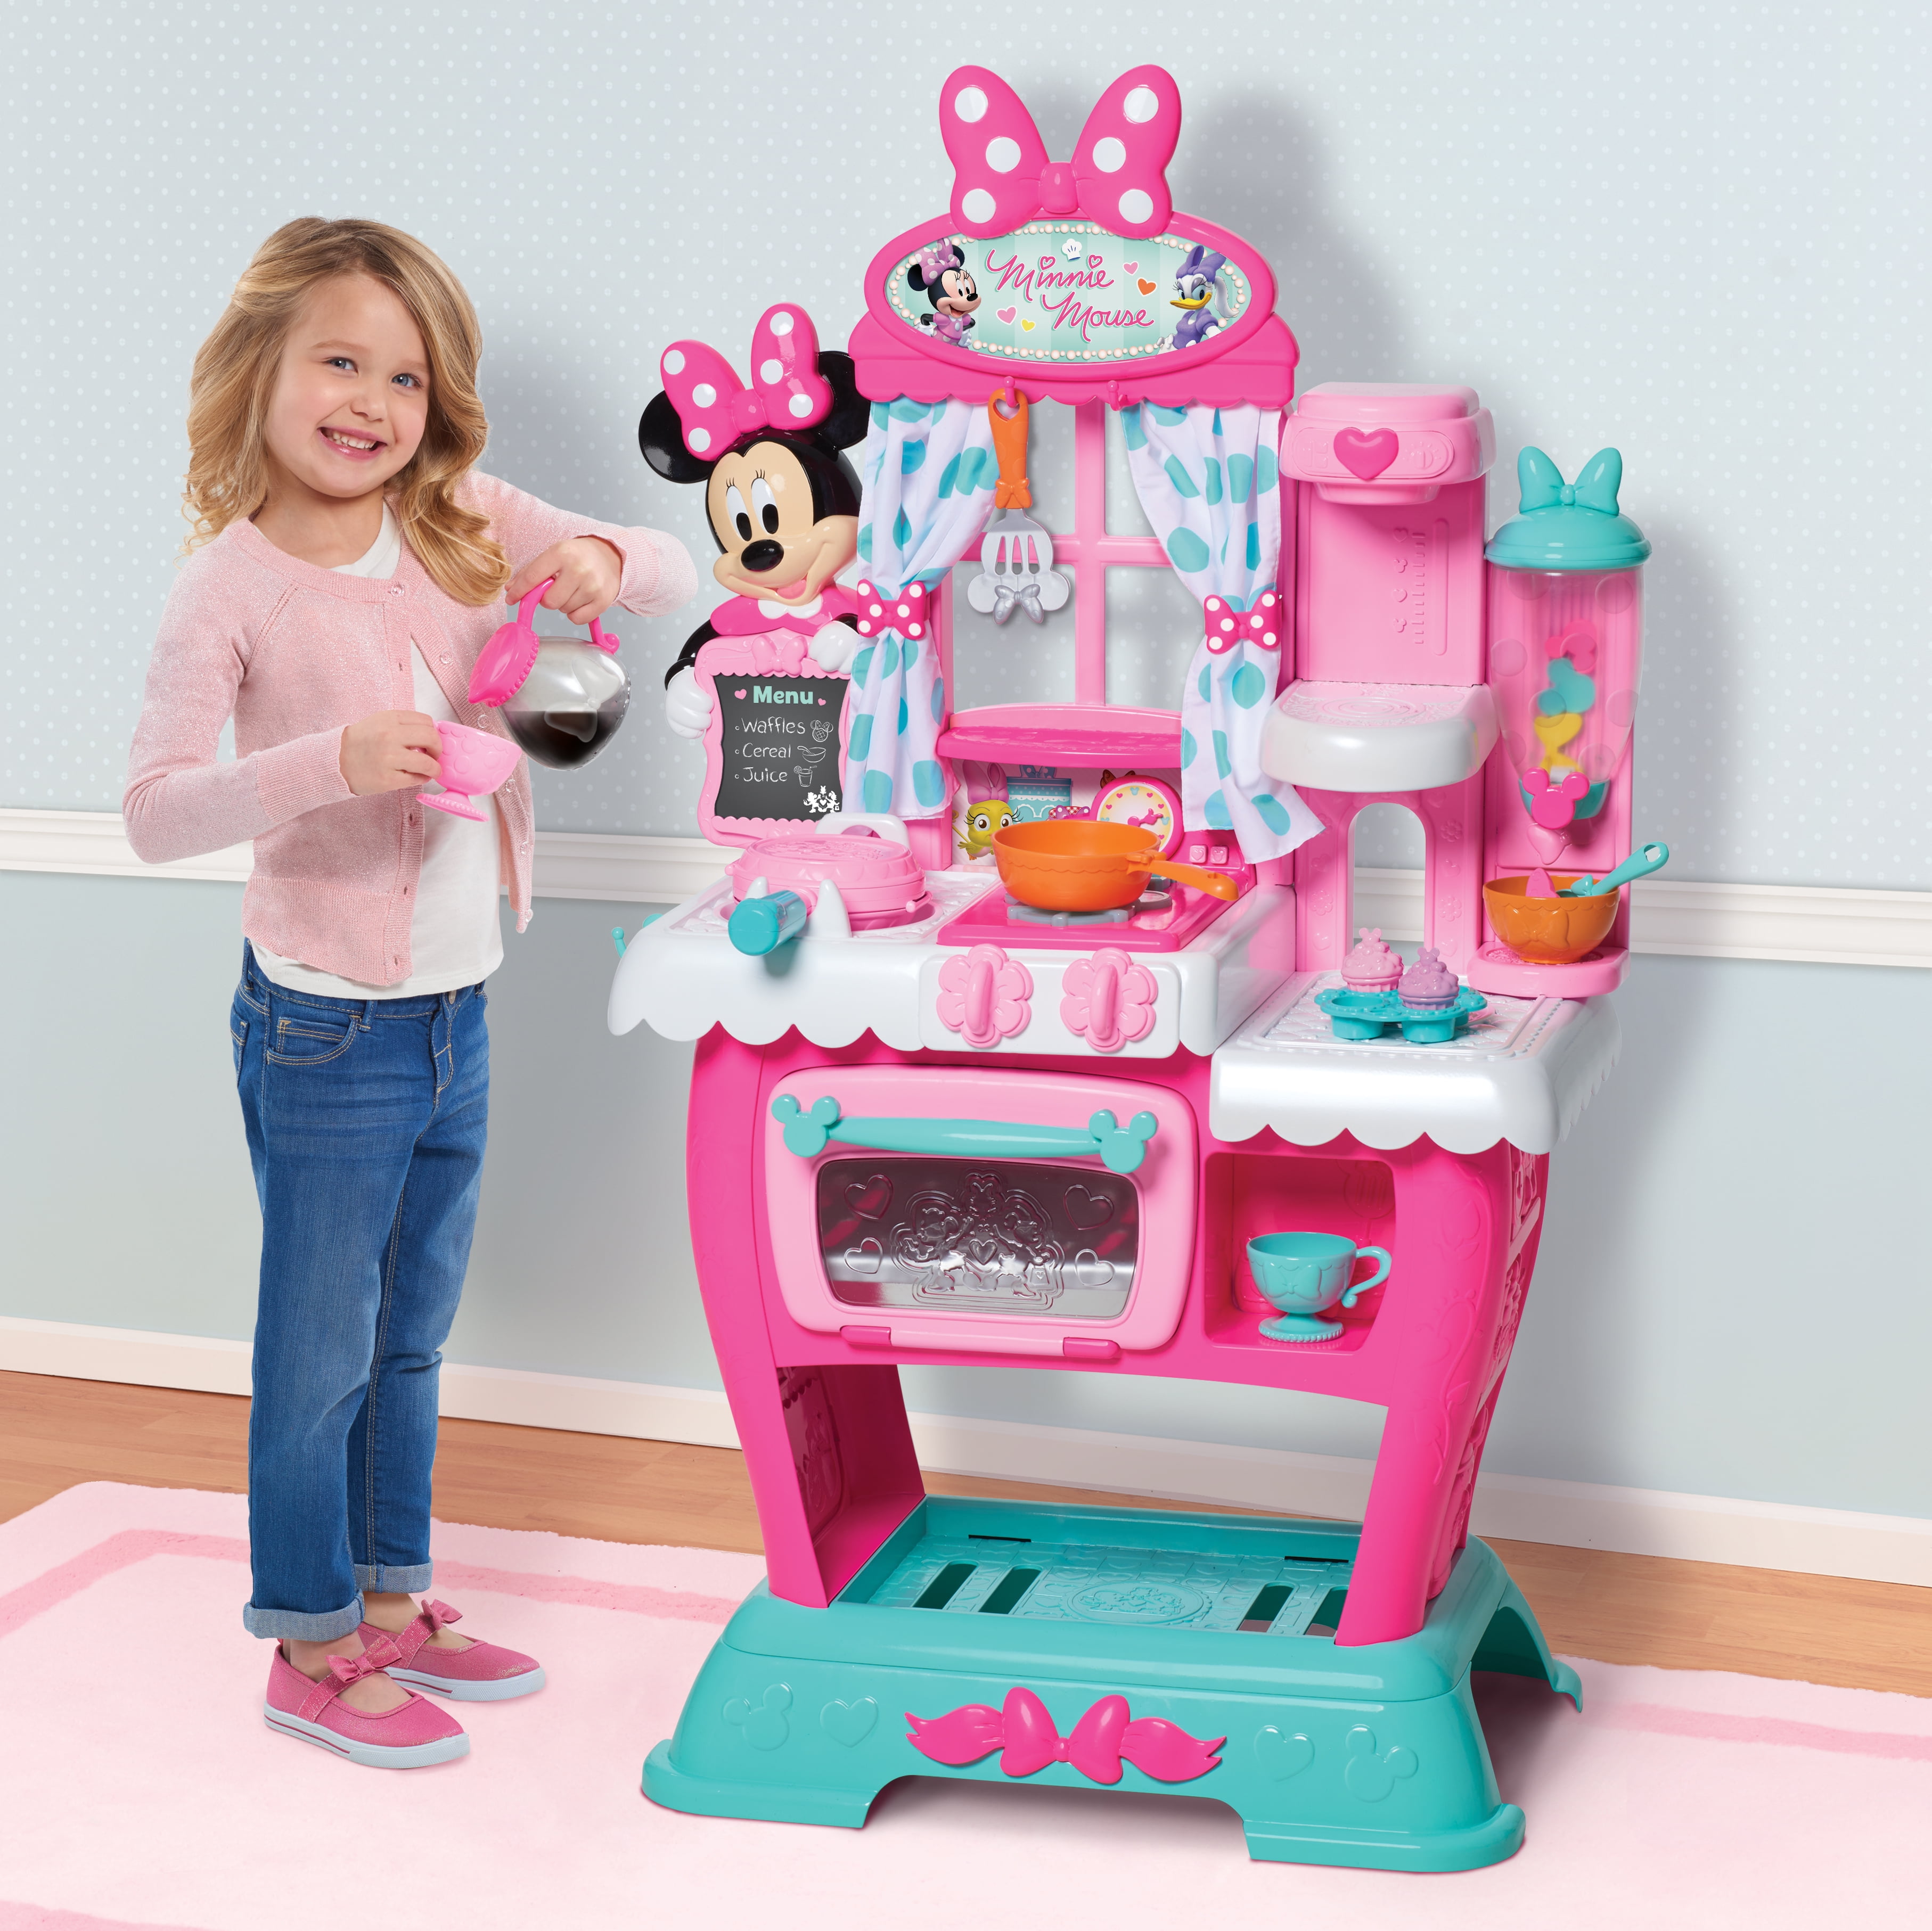  Minnie  Mouse  Kitchen  Play Set  Kids  Girls Pretend Toys Pink 